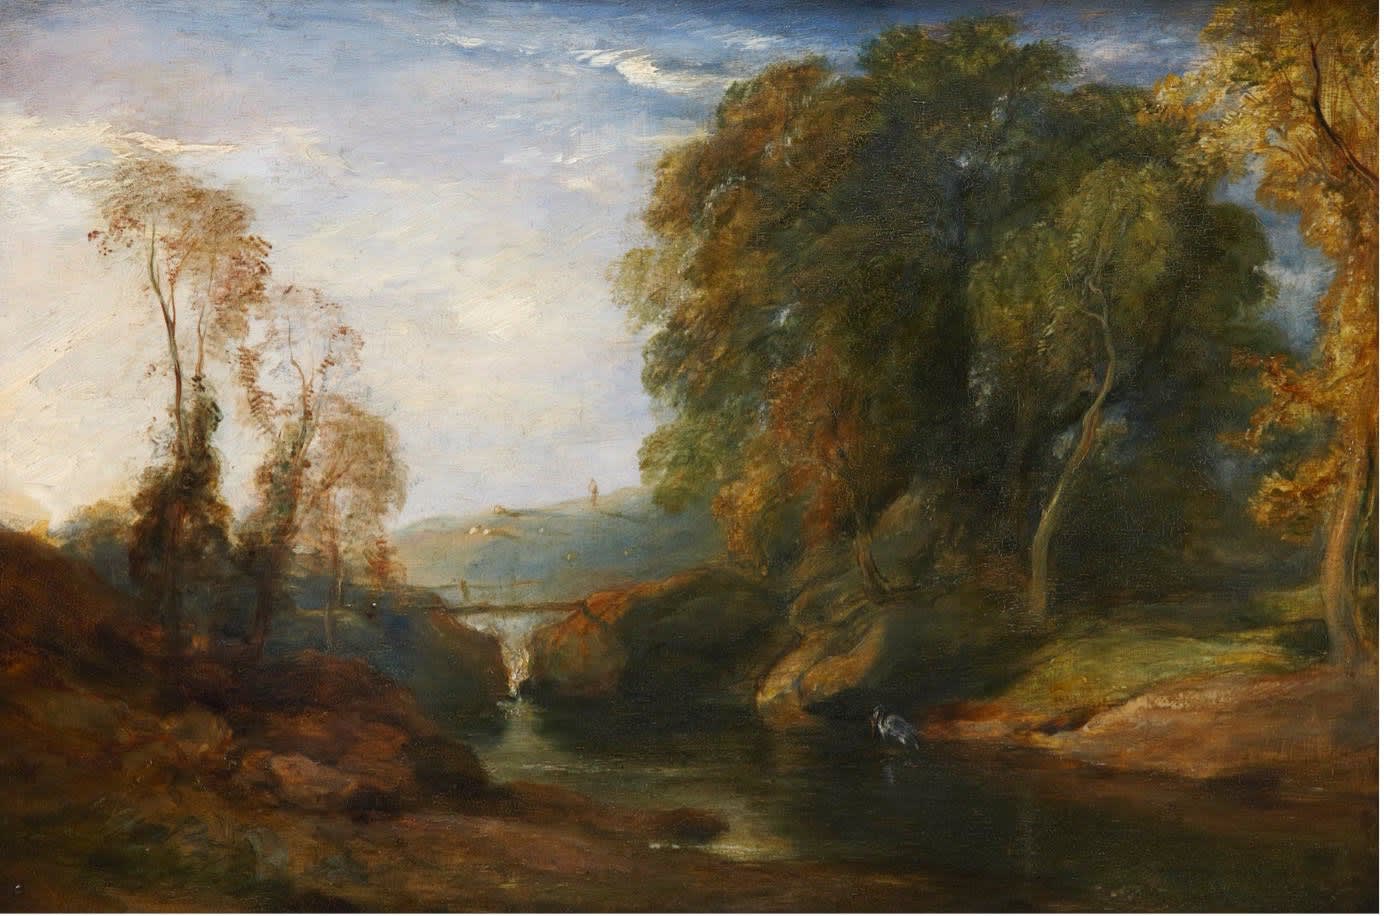 William Simson RSA (1800-47) Landscape  oil on panel, around 1831, 30.5 x 46.3cm  RSA Diploma Collection (Deposited 1831) 1995.102